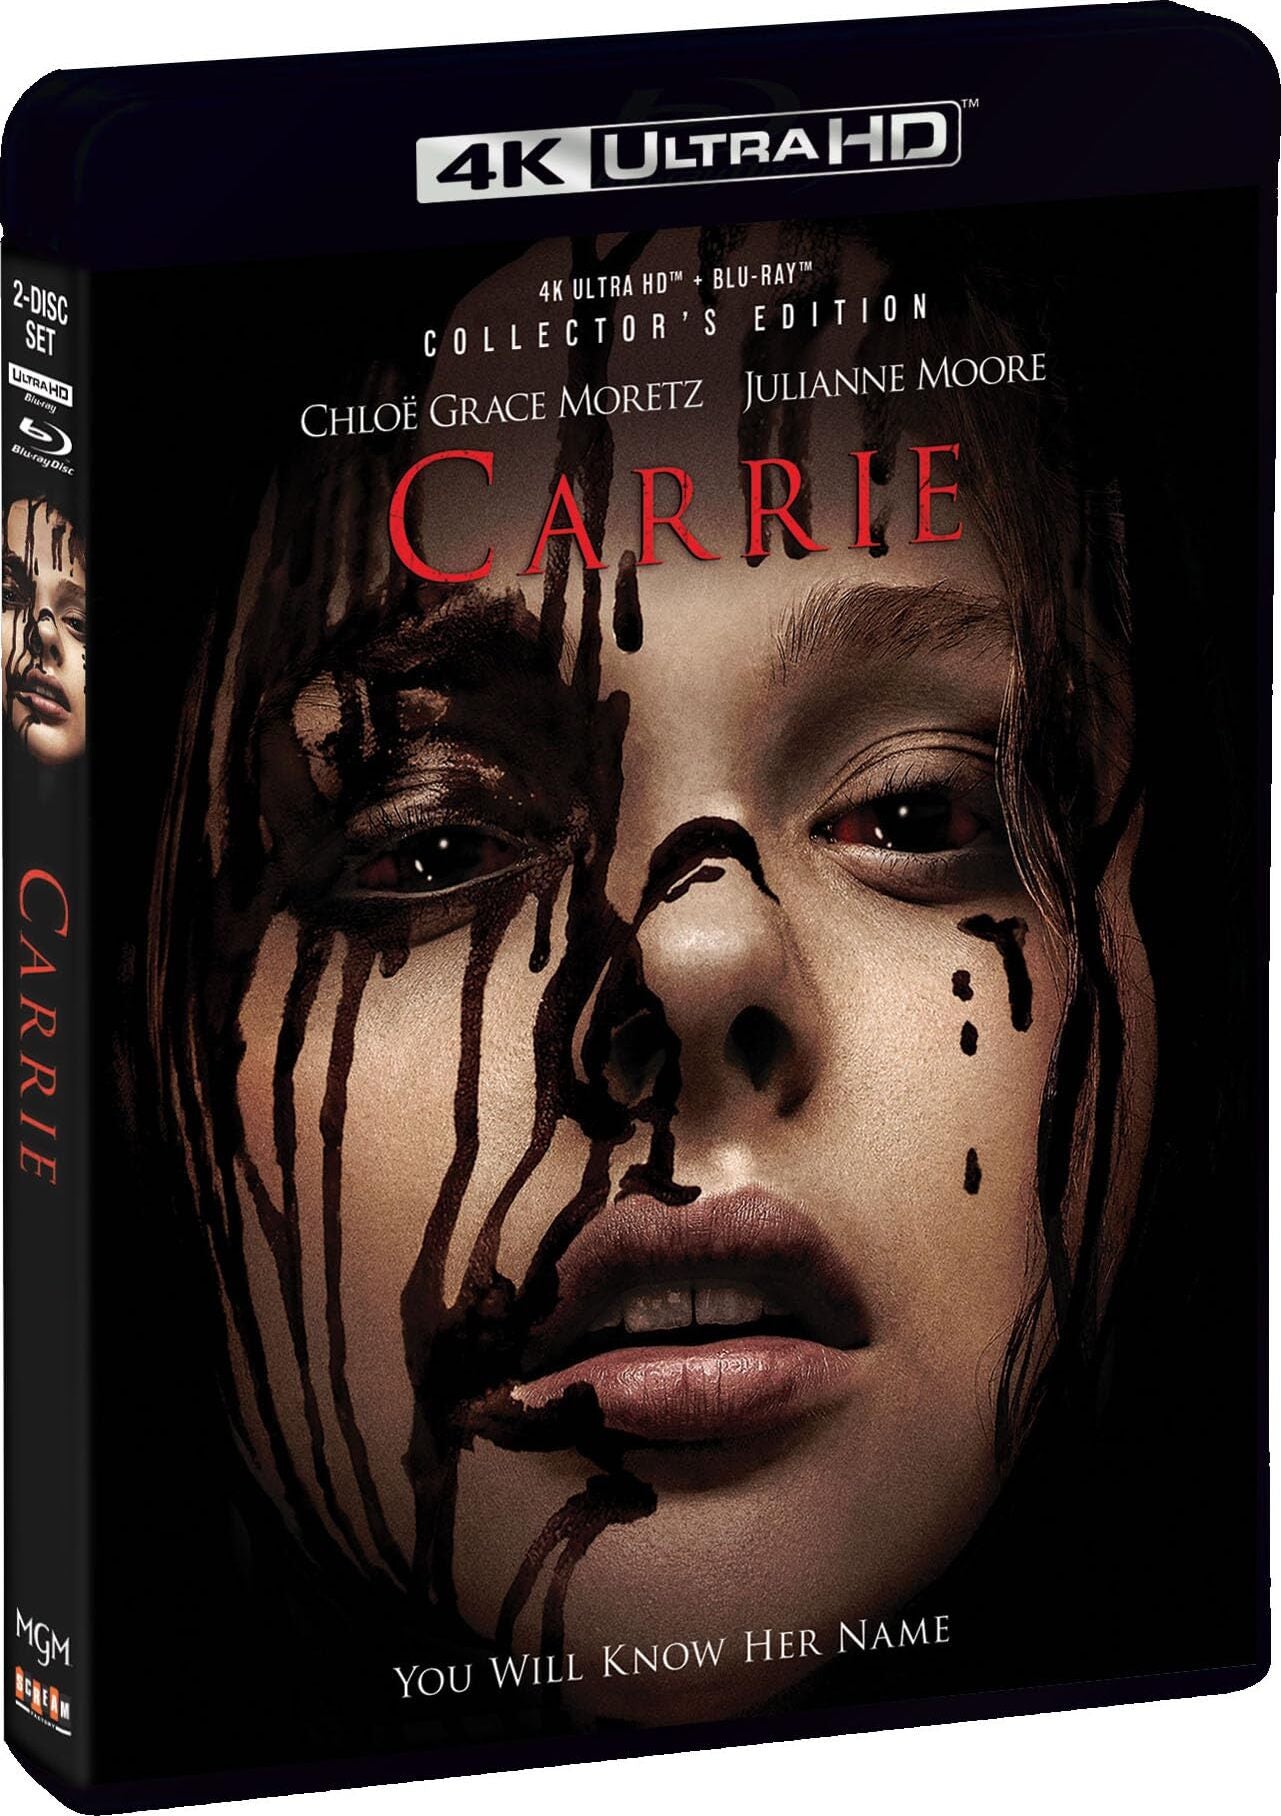 Carrie (2013) [4K UHD] [US]